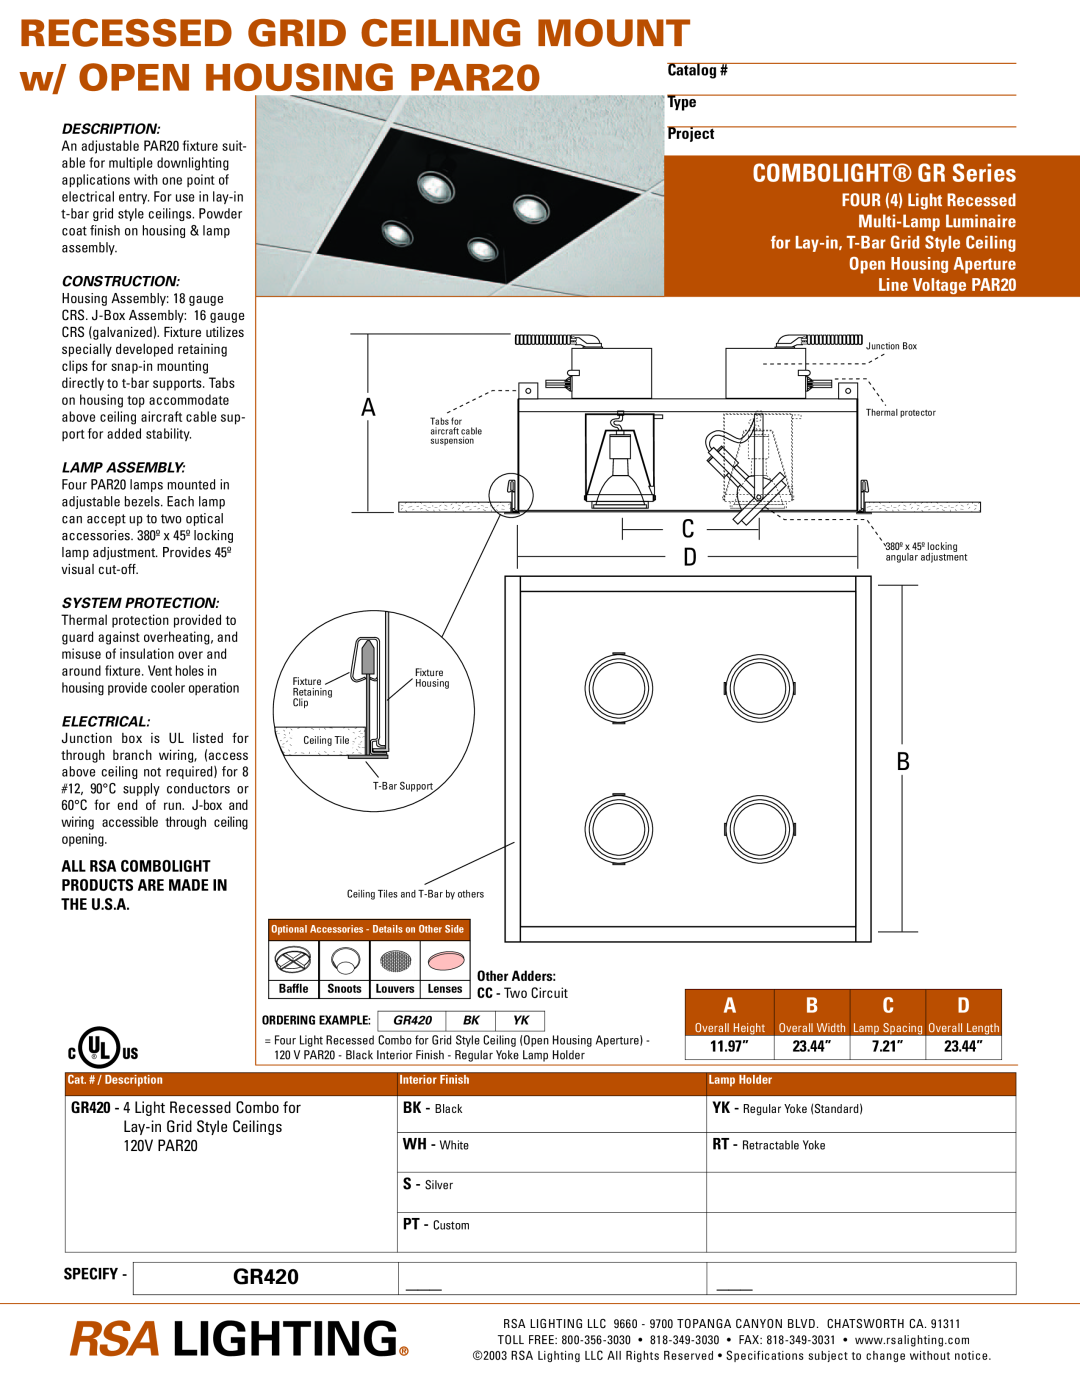 Cooper Lighting GR420 specifications Recessed Grid Ceiling Mount, w/ OPEN HOUSING PAR20, COMBOLIGHT GR Series, Catalog # 